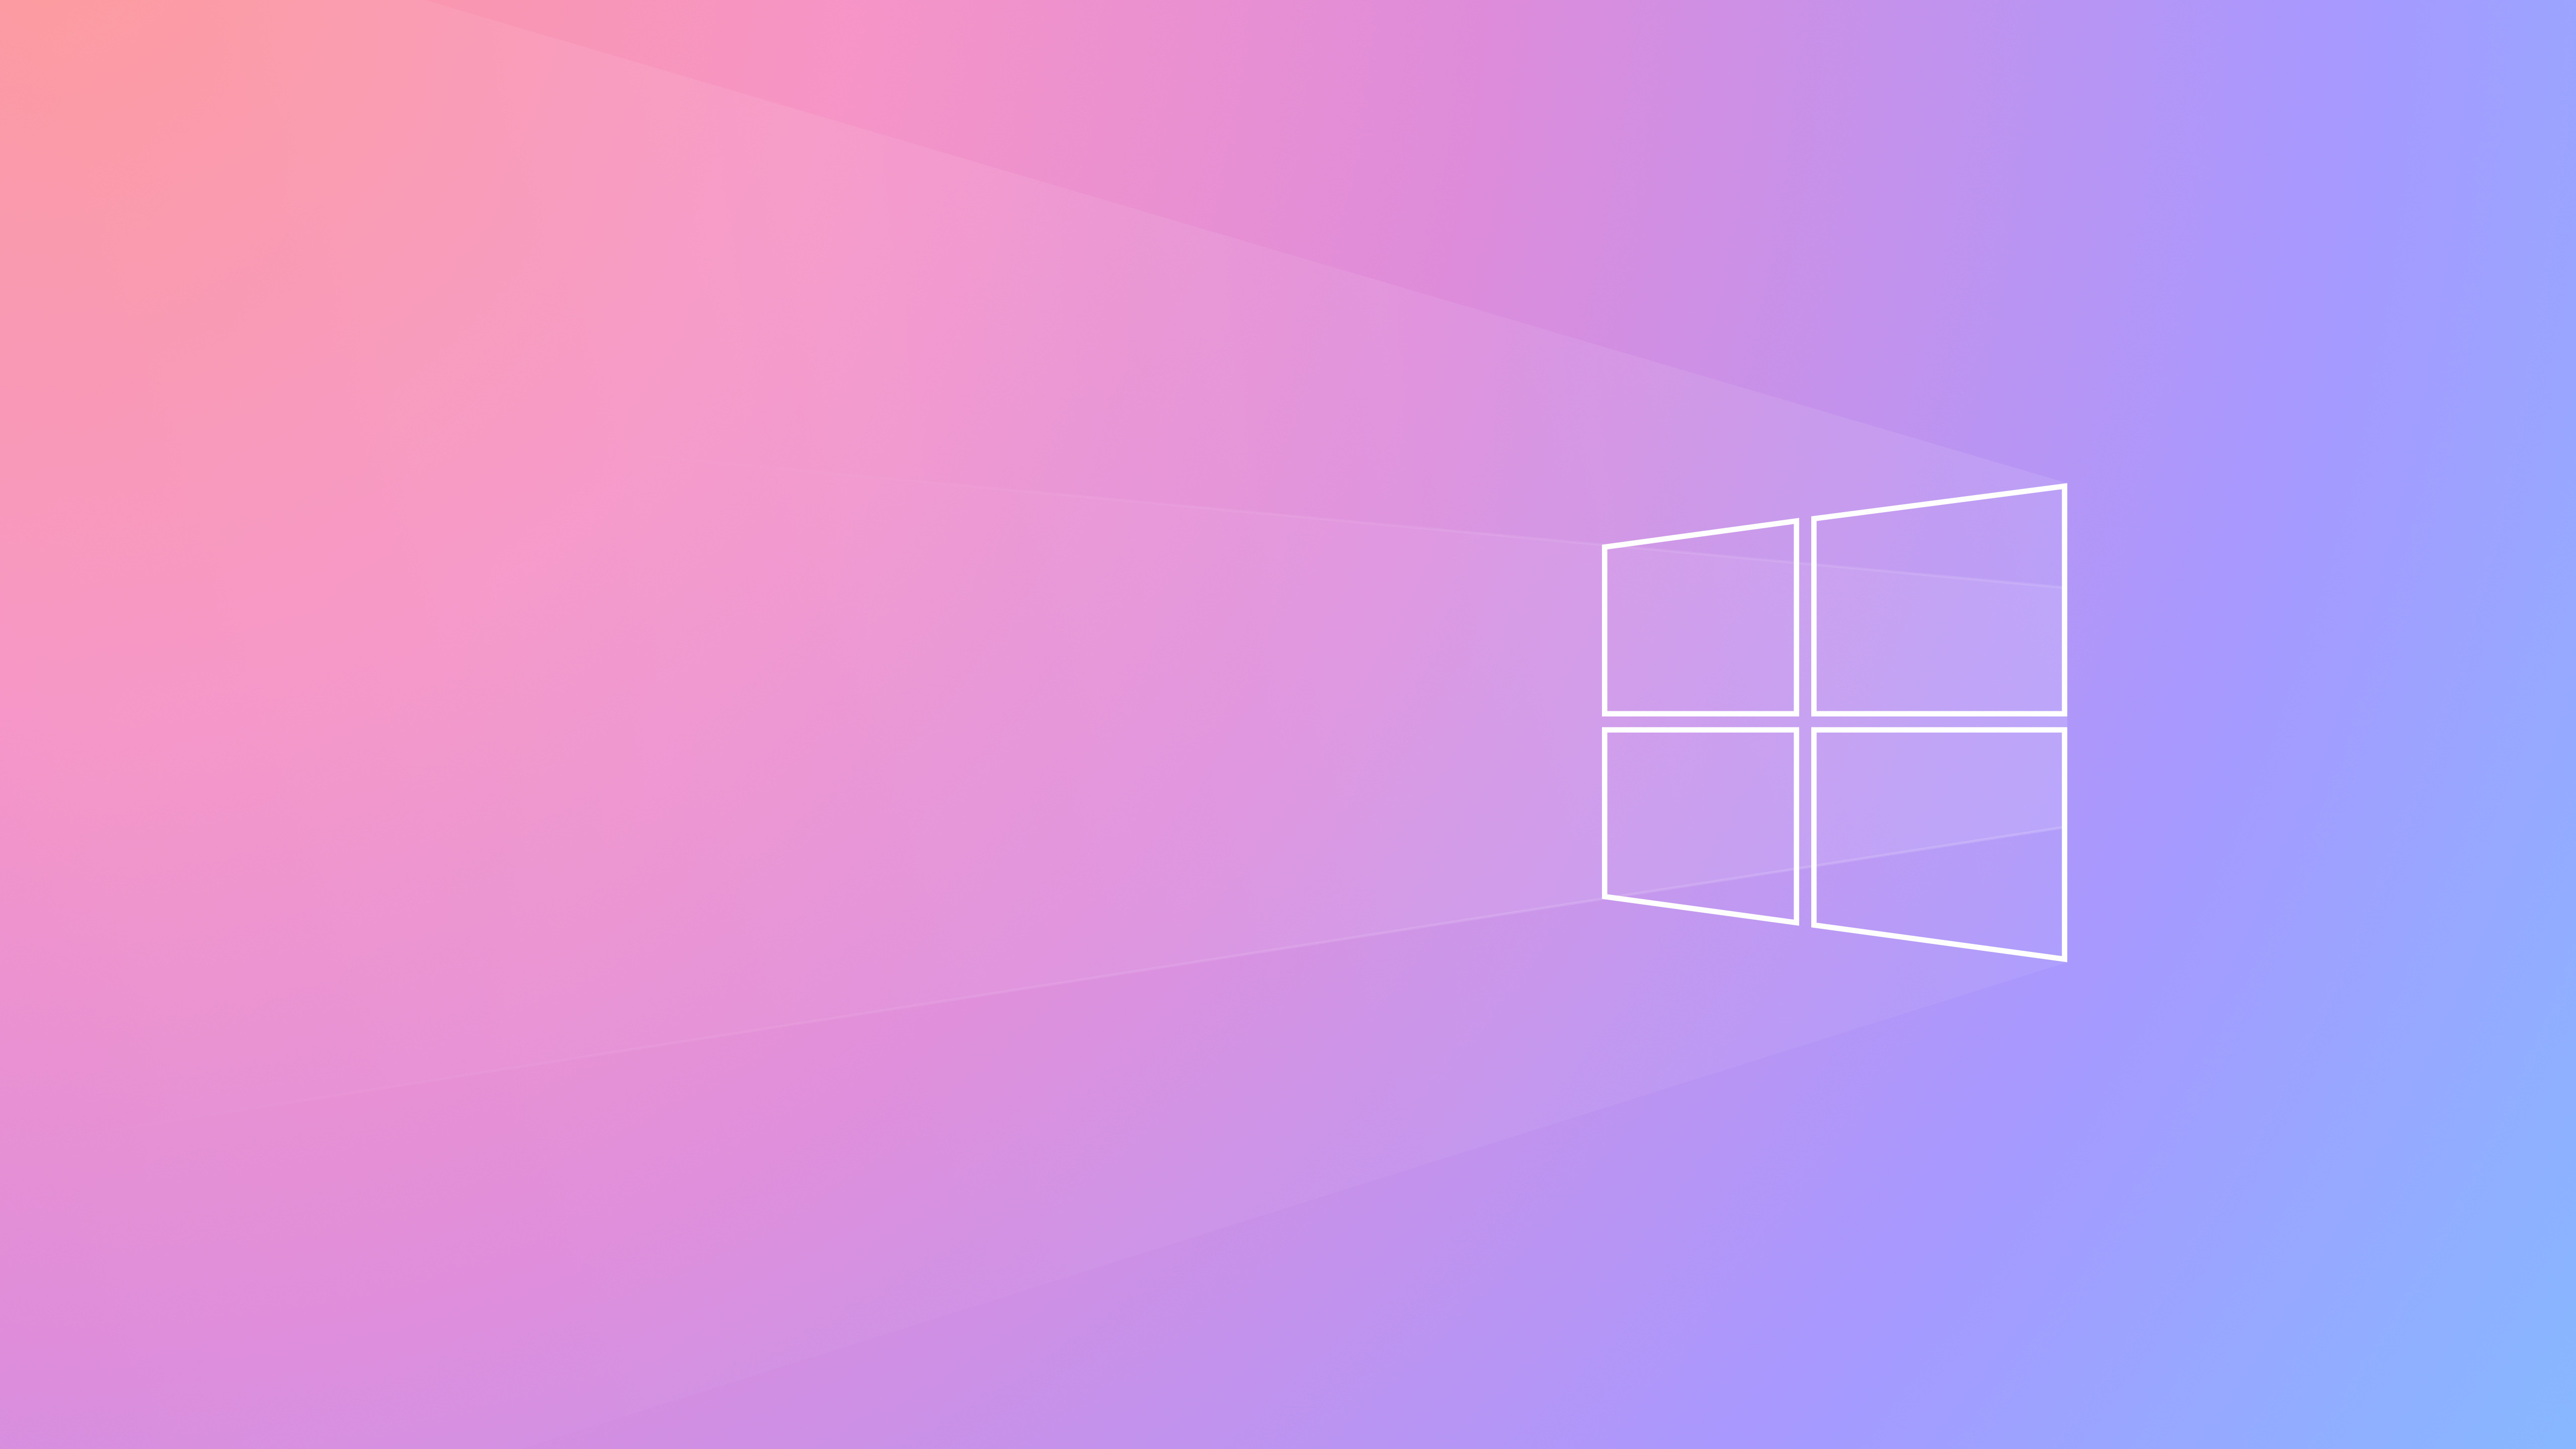 Download wallpaper: Windows Logo 2020 5120x2880